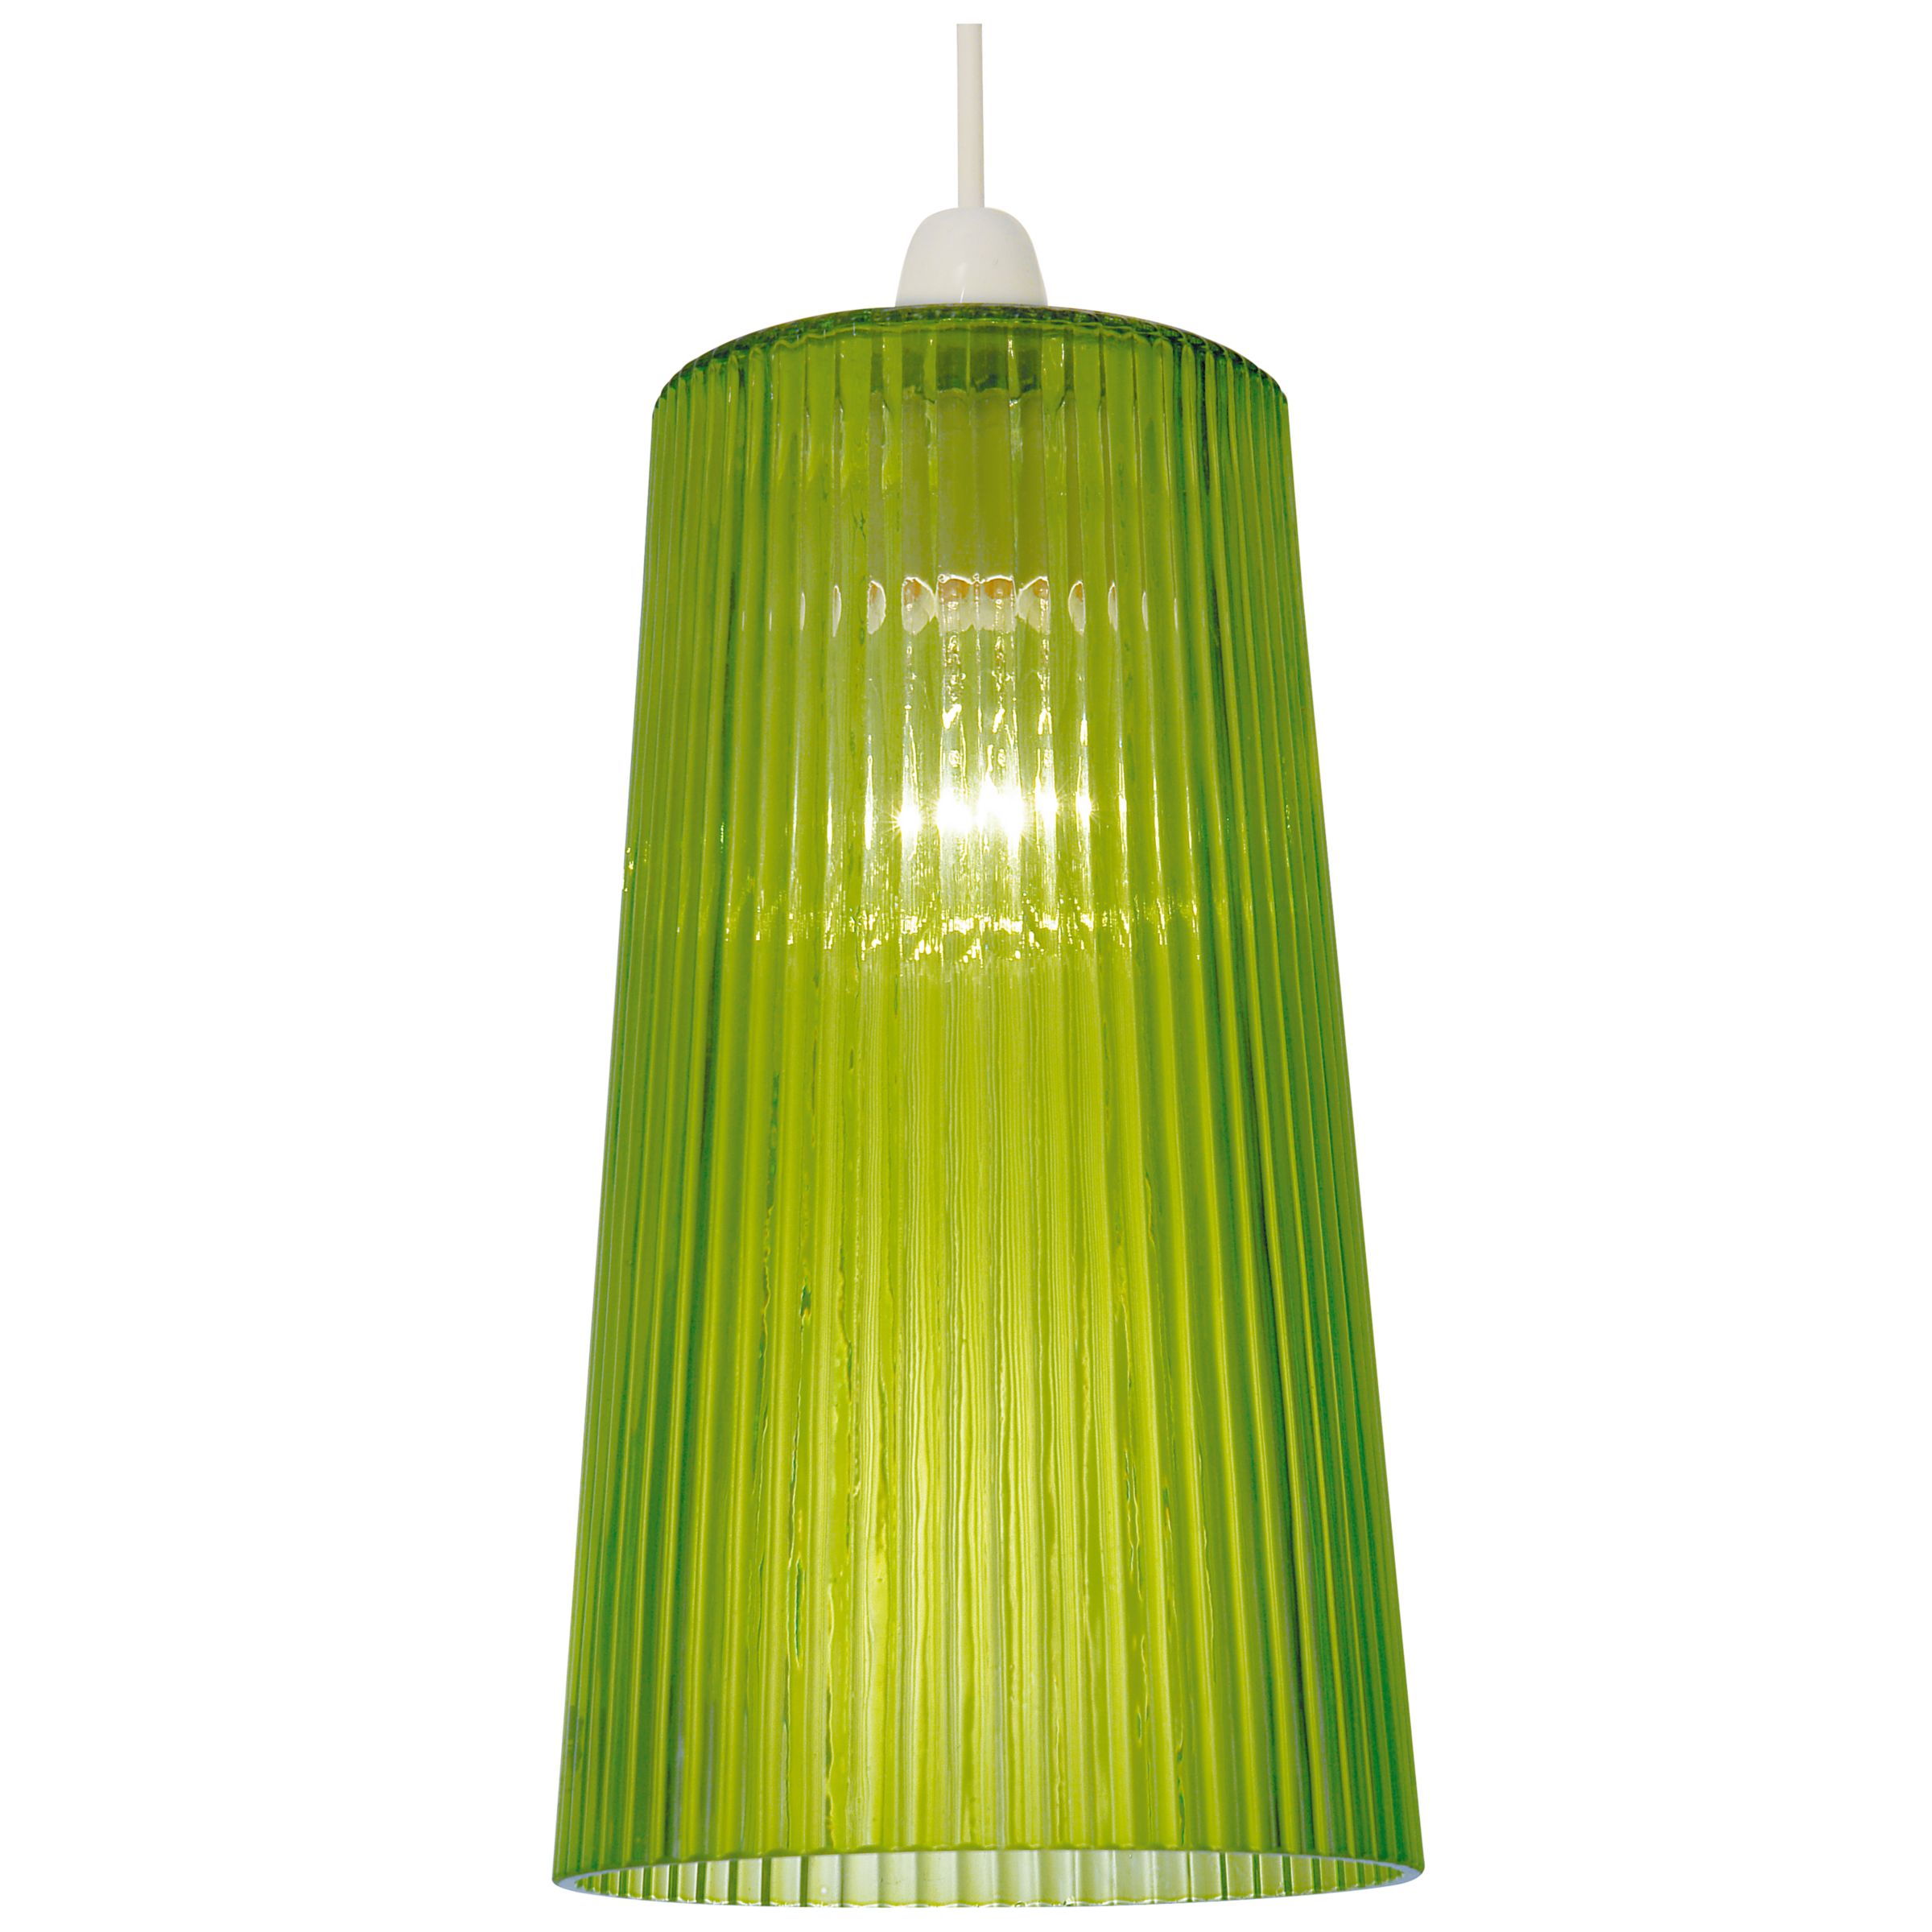 John Lewis Ribbed Glass Ceiling Light, Green